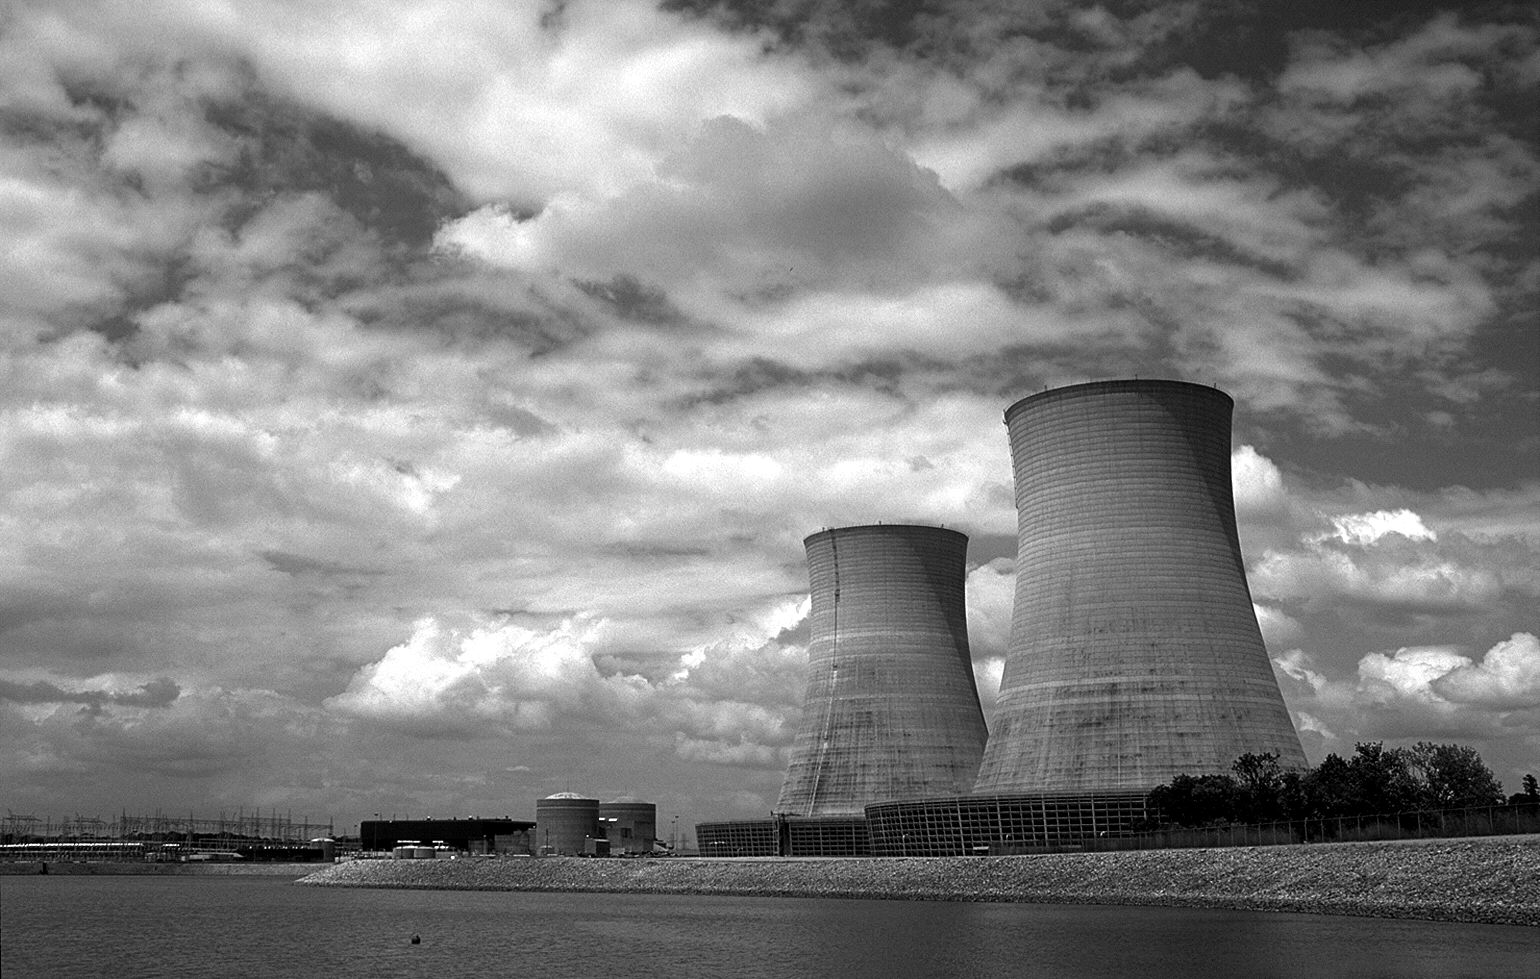 Sequoyah Nuclear Power Plant
Keywords: Sequoyah Nuclear Power Plant TVA